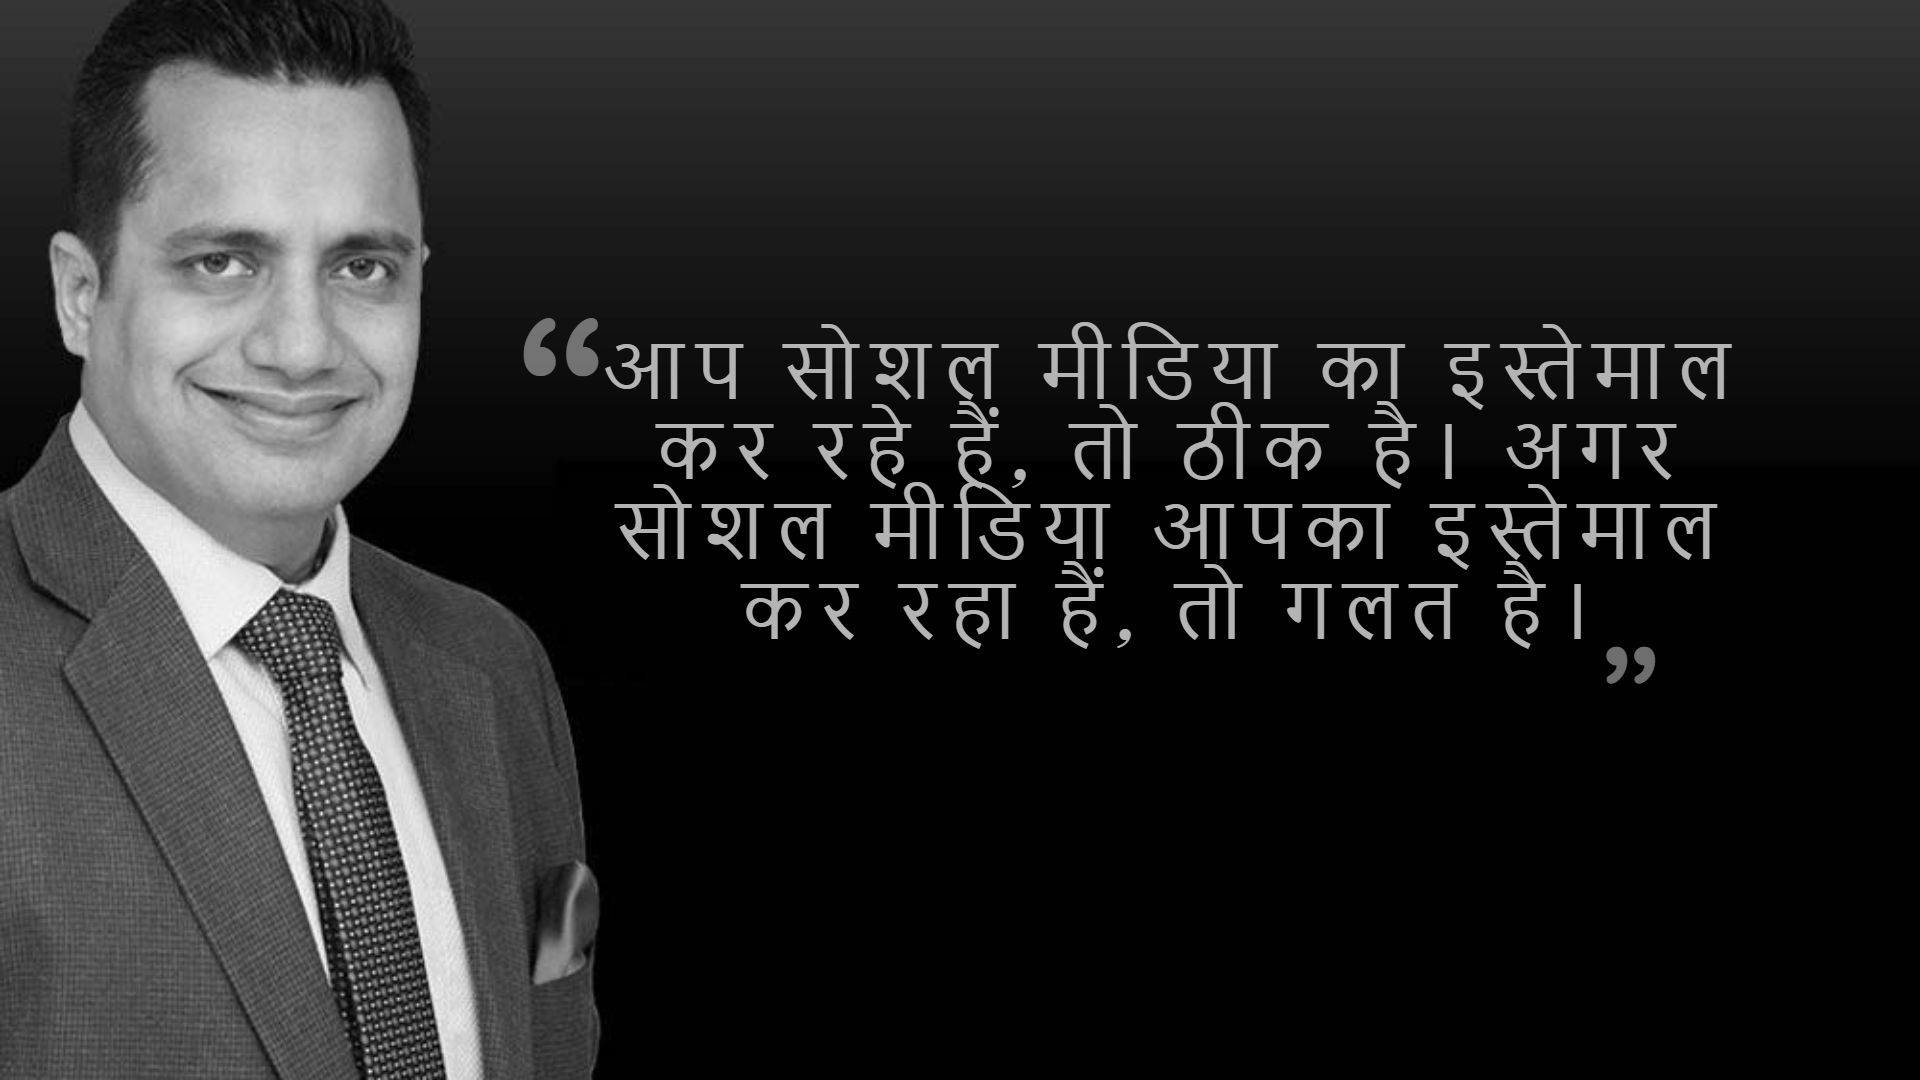 Dr. Vivek Bindra Quotes In Hindi